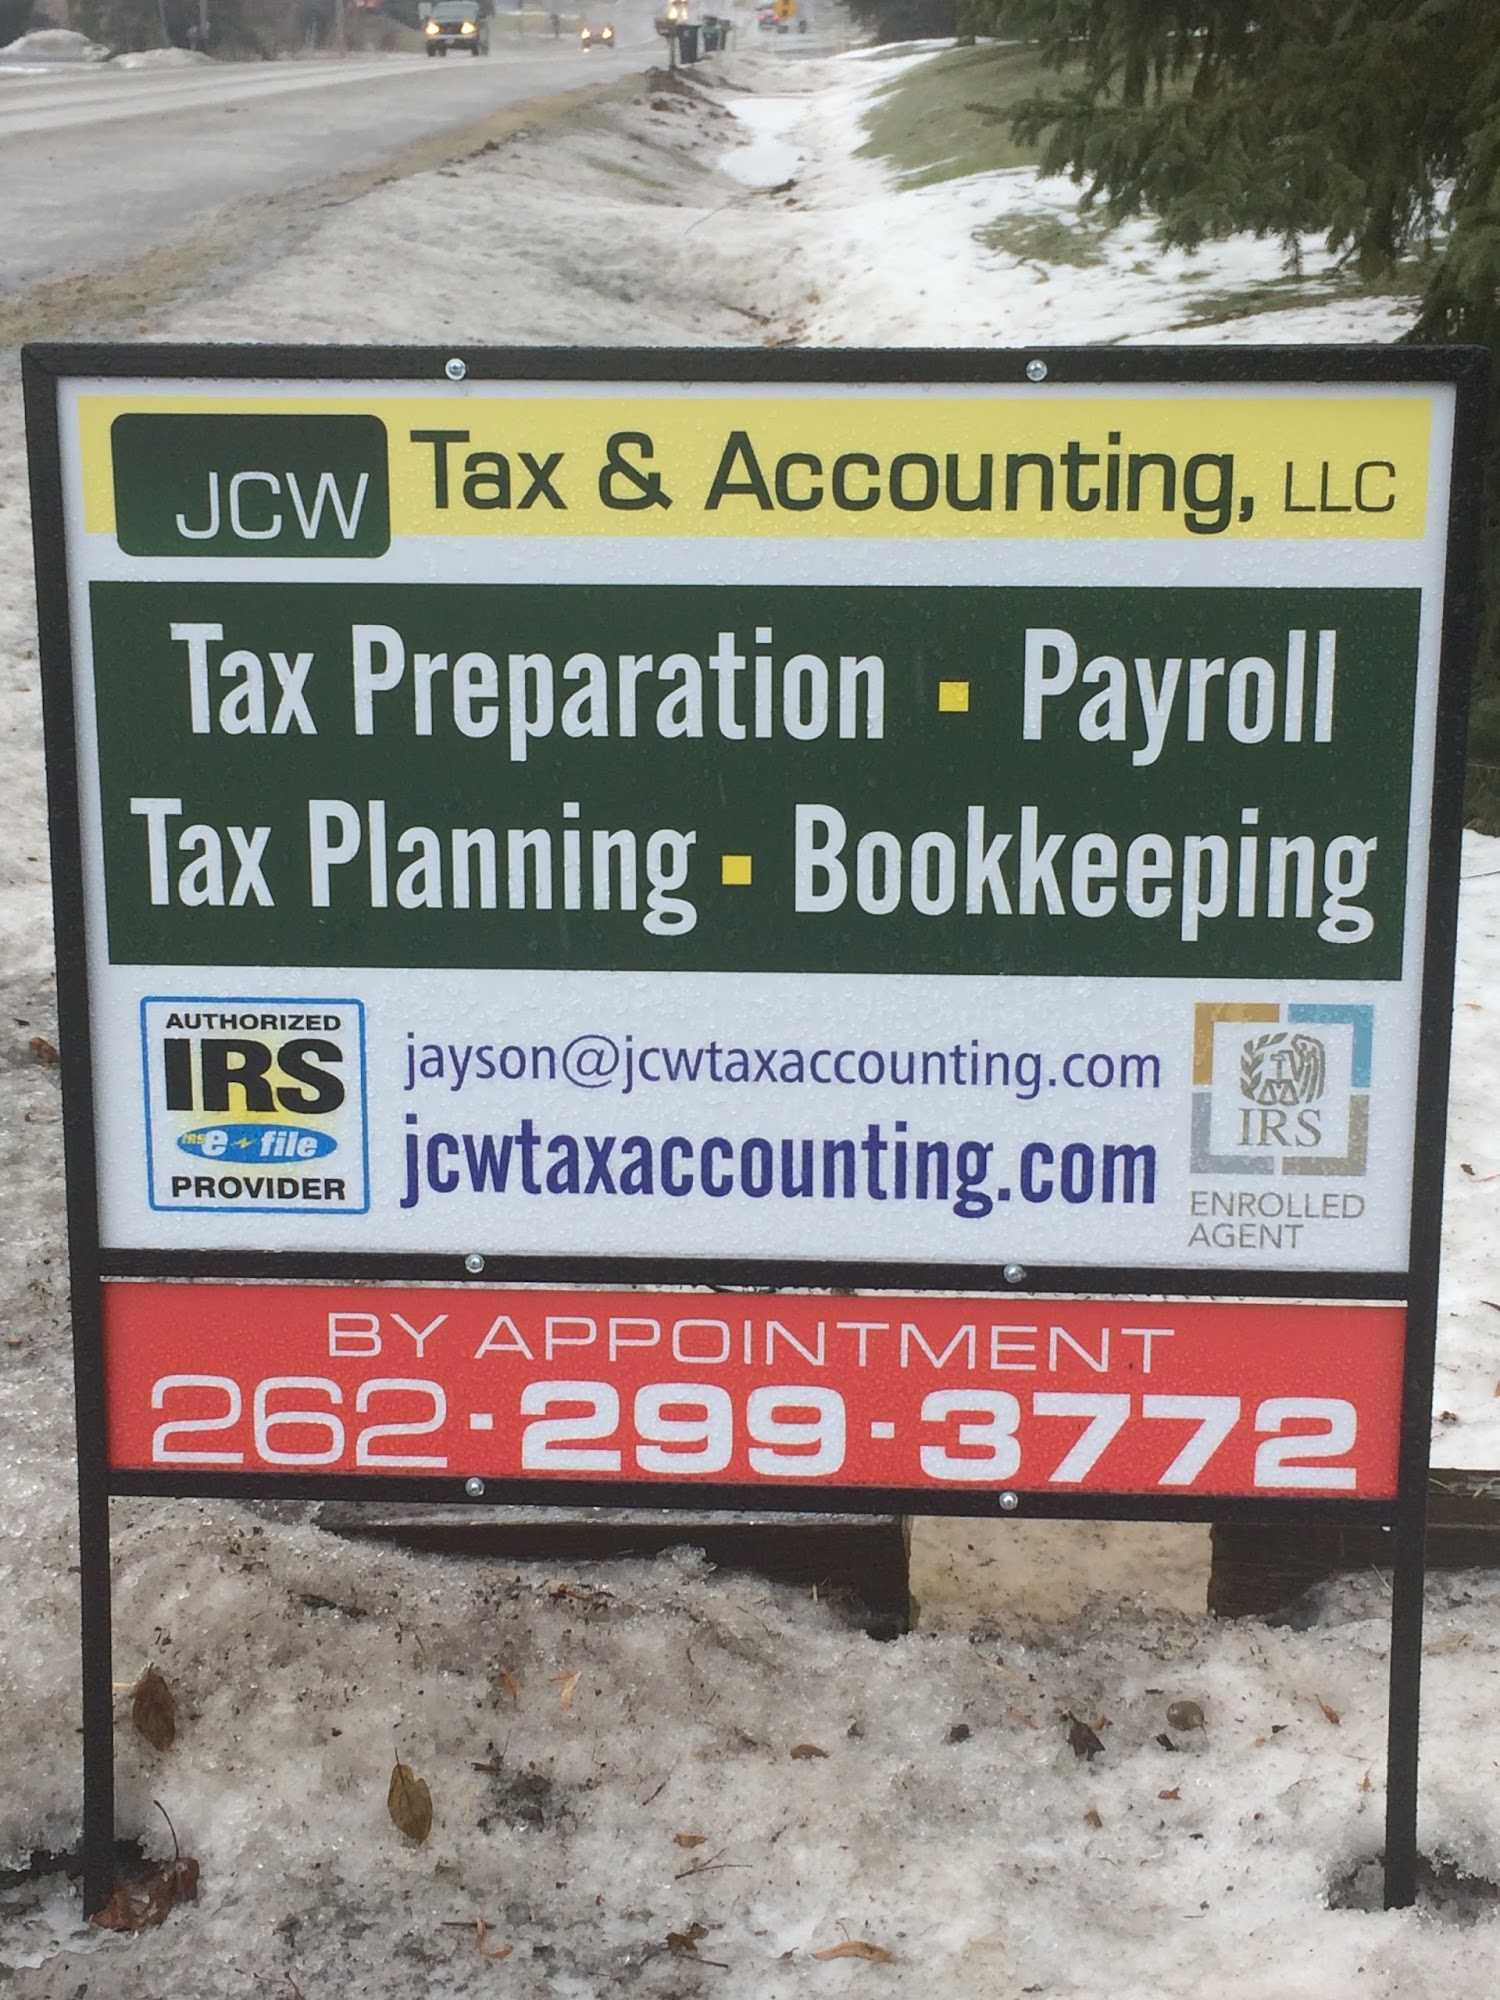 JCW Tax & Accounting, LLC